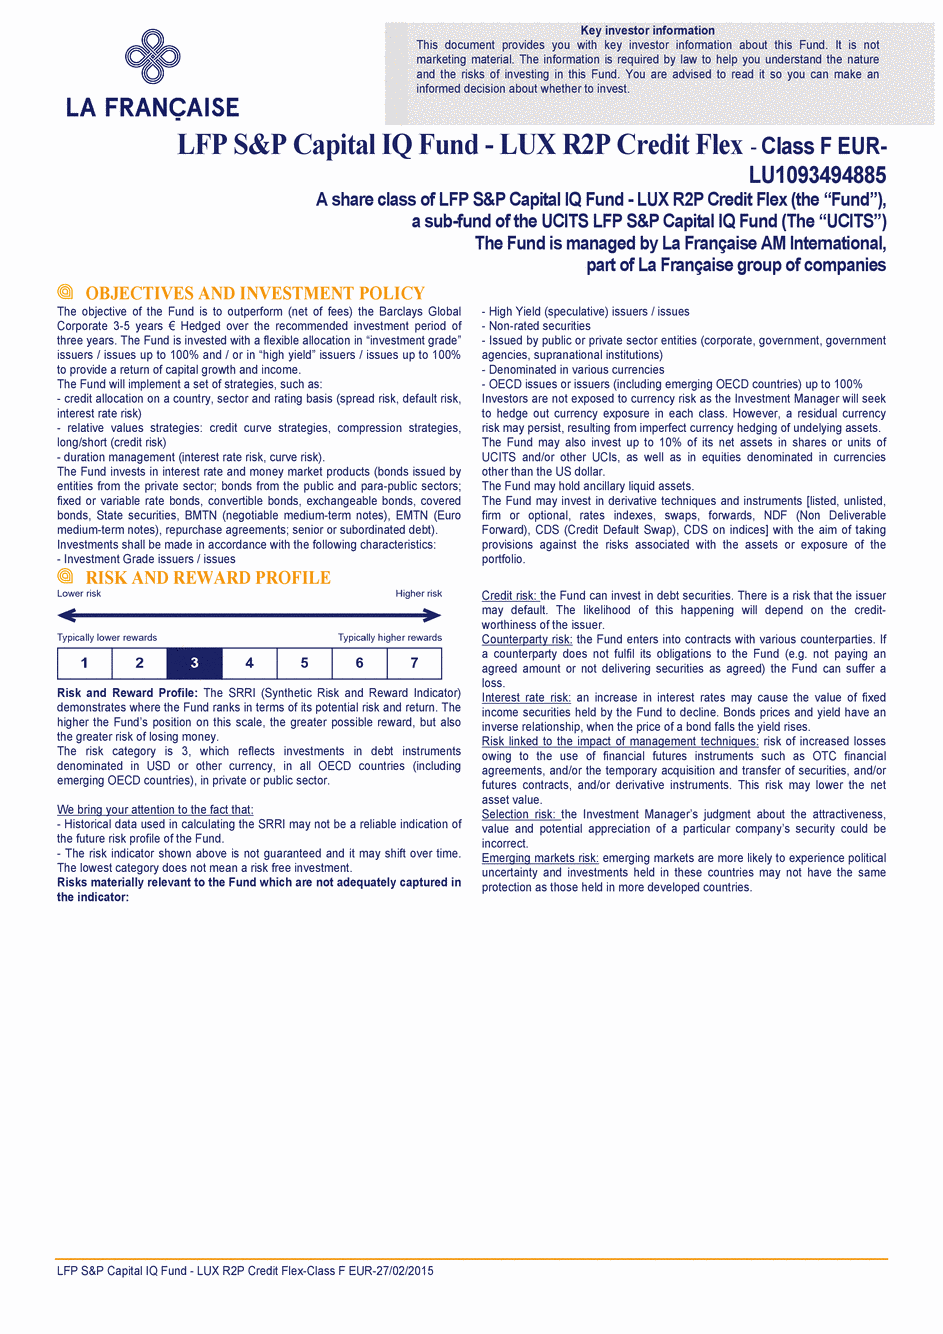 DICI LFP S&P Capital IQ Fund - LUX R2P Credit Flex F CAP EUR - 27/02/2015 - Anglais